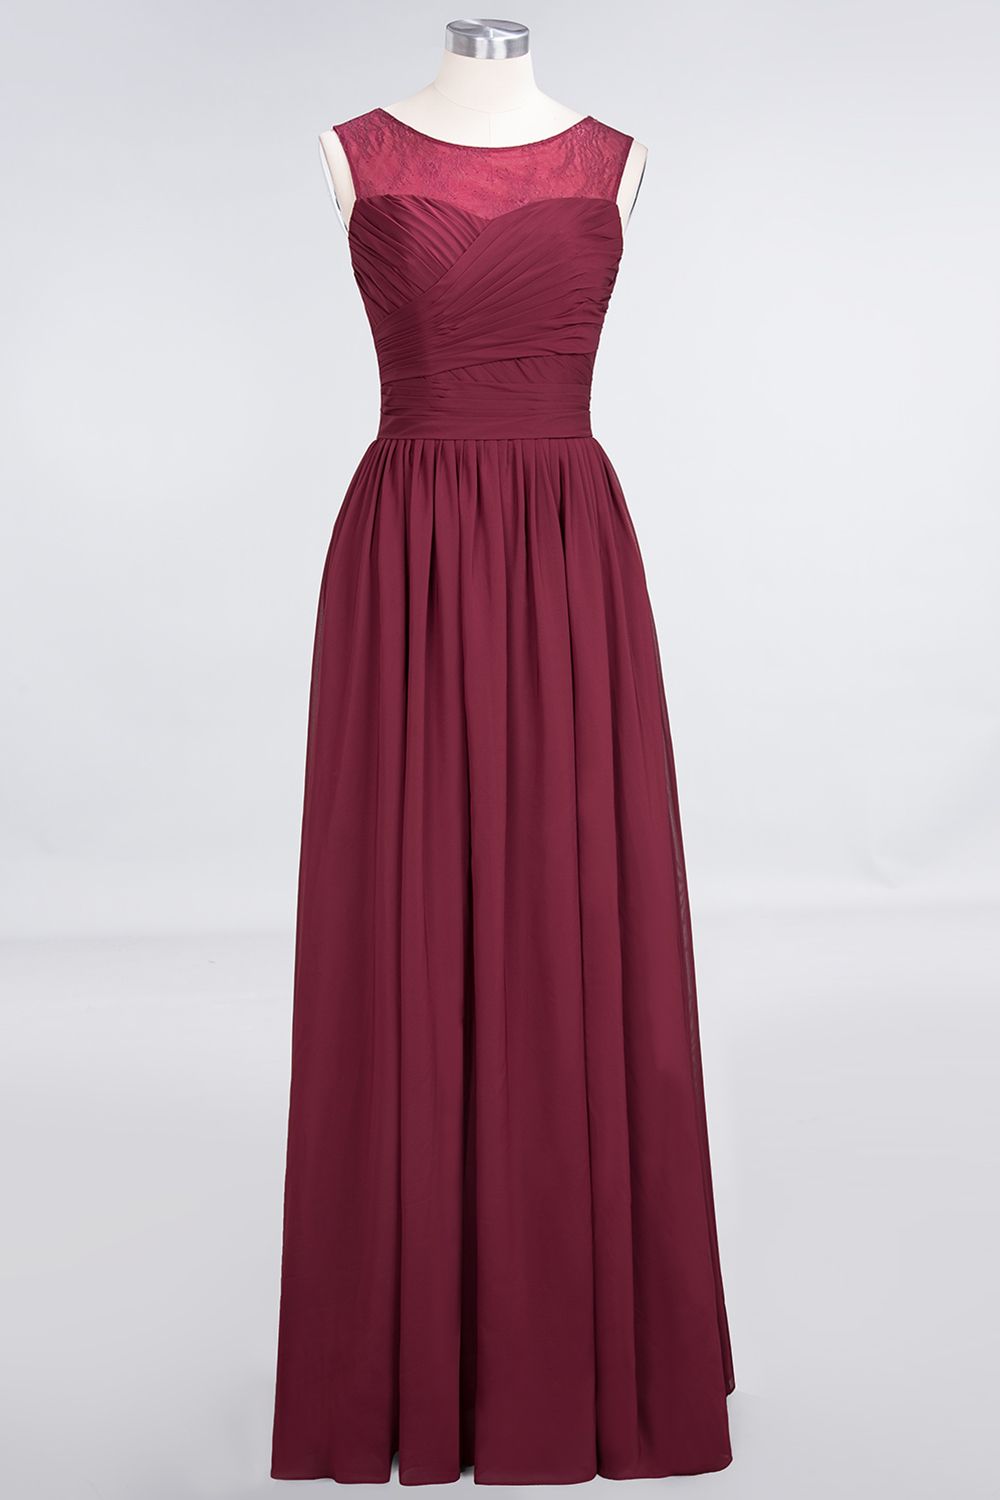 Burgundy Long A-Line Chiffon Tulle Lace Bridesmaid Dress with Ruffle-BIZTUNNEL